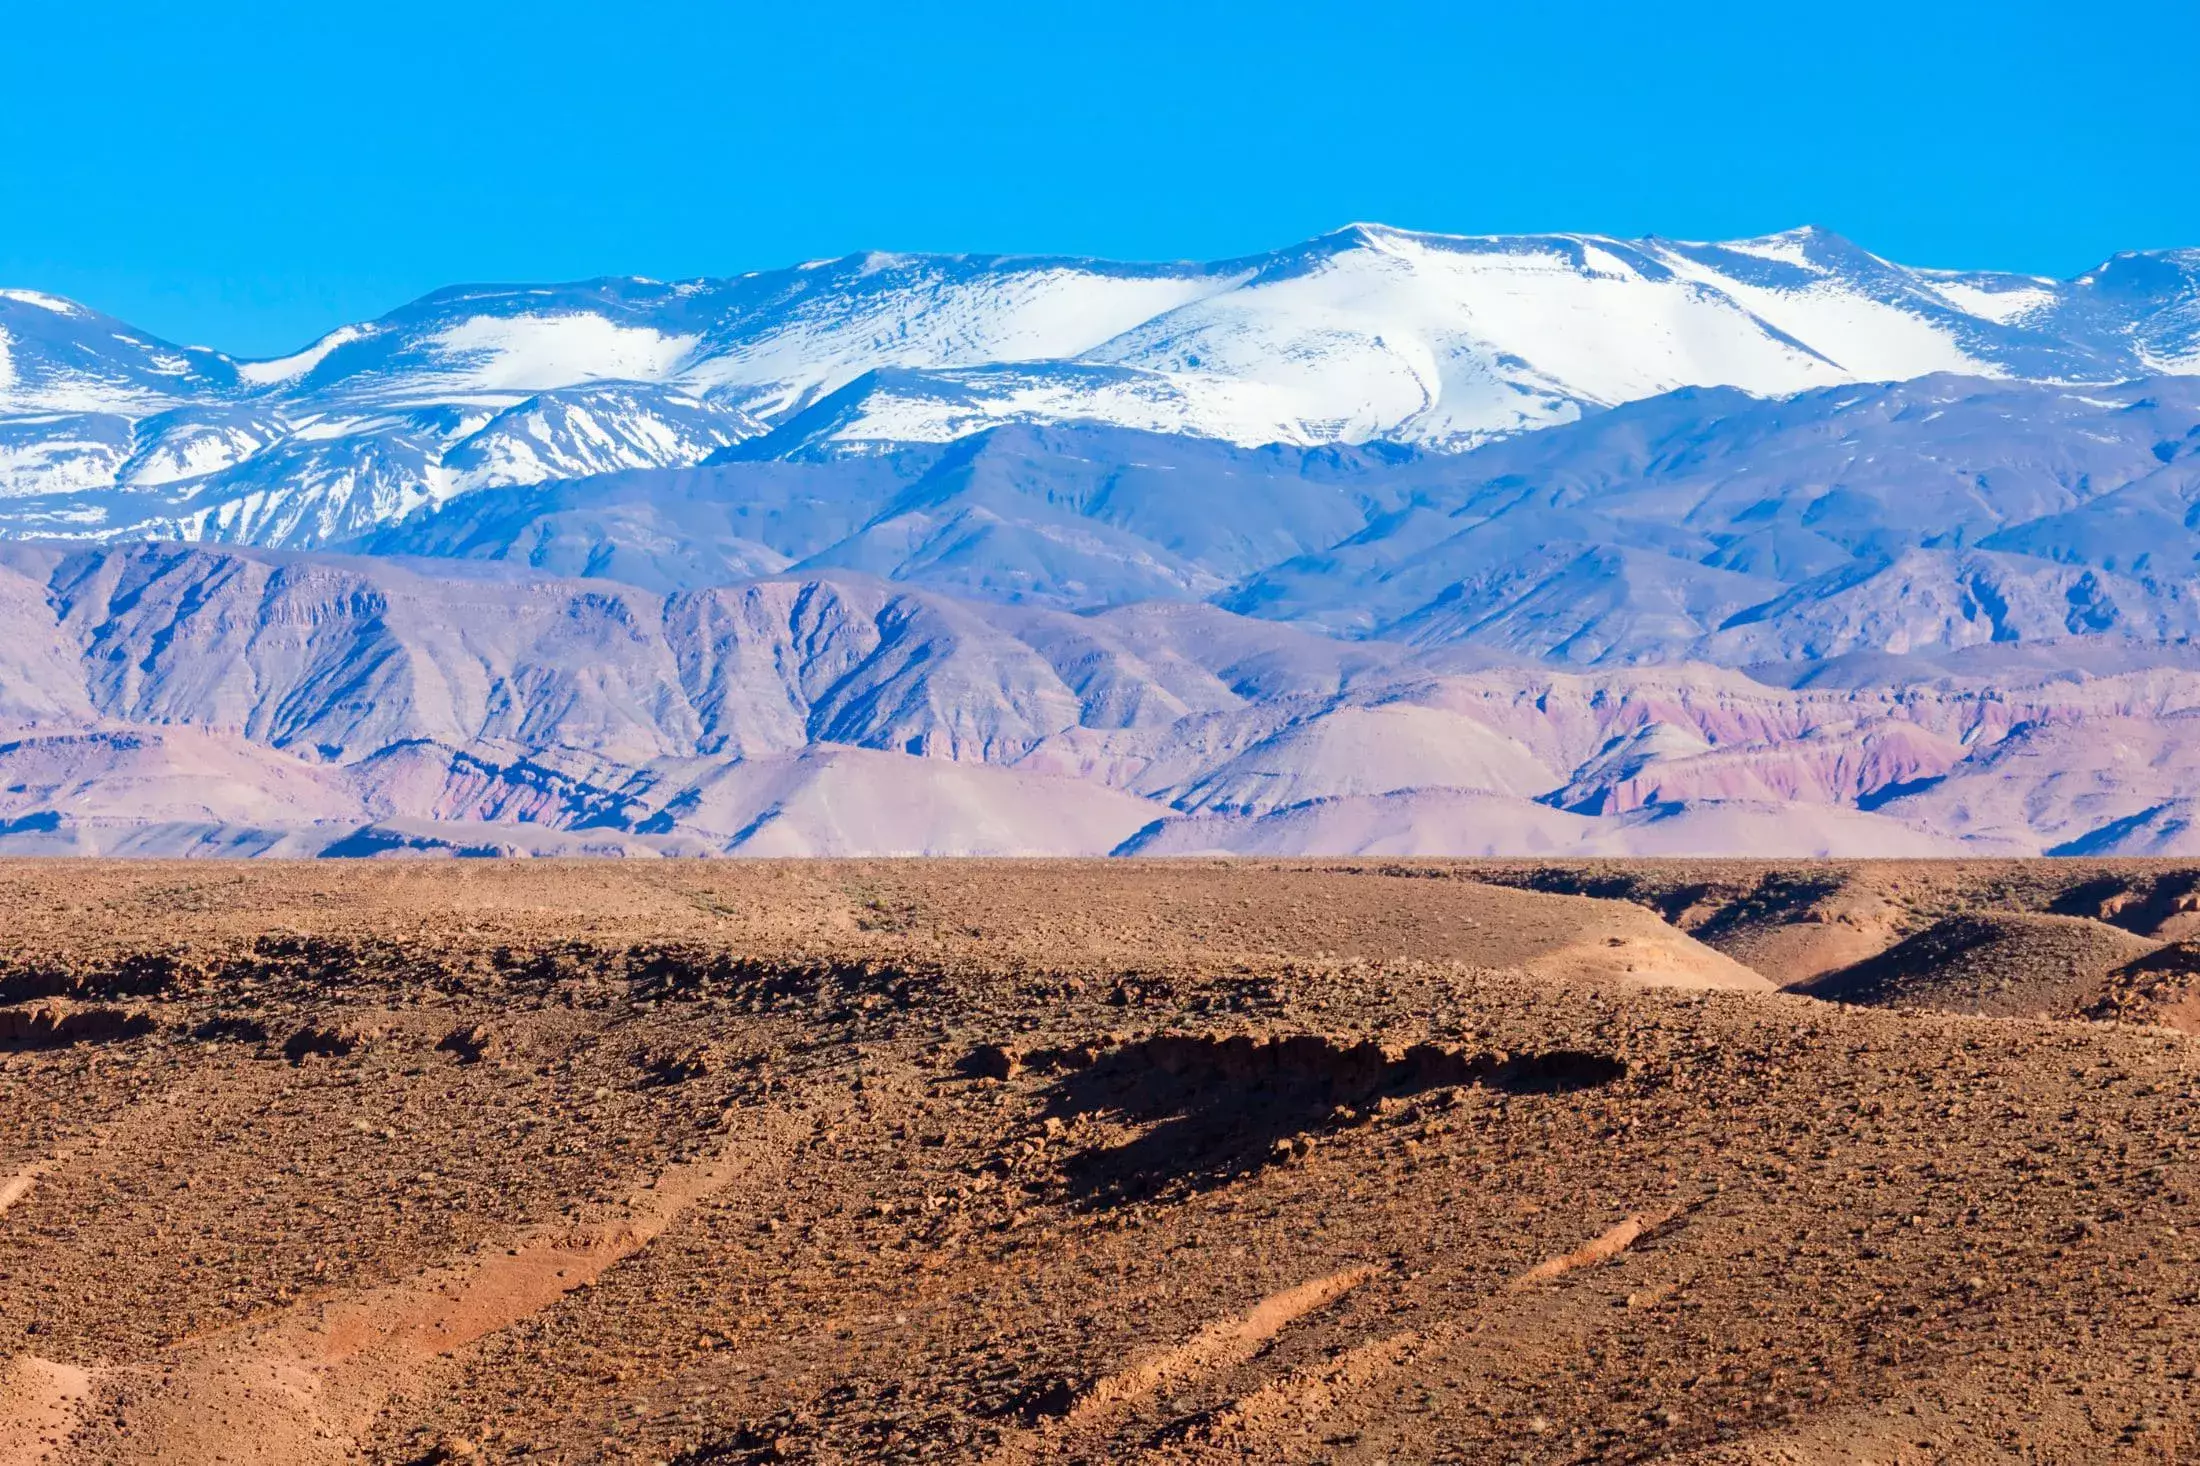 The High Atlas Mountains in Morocco